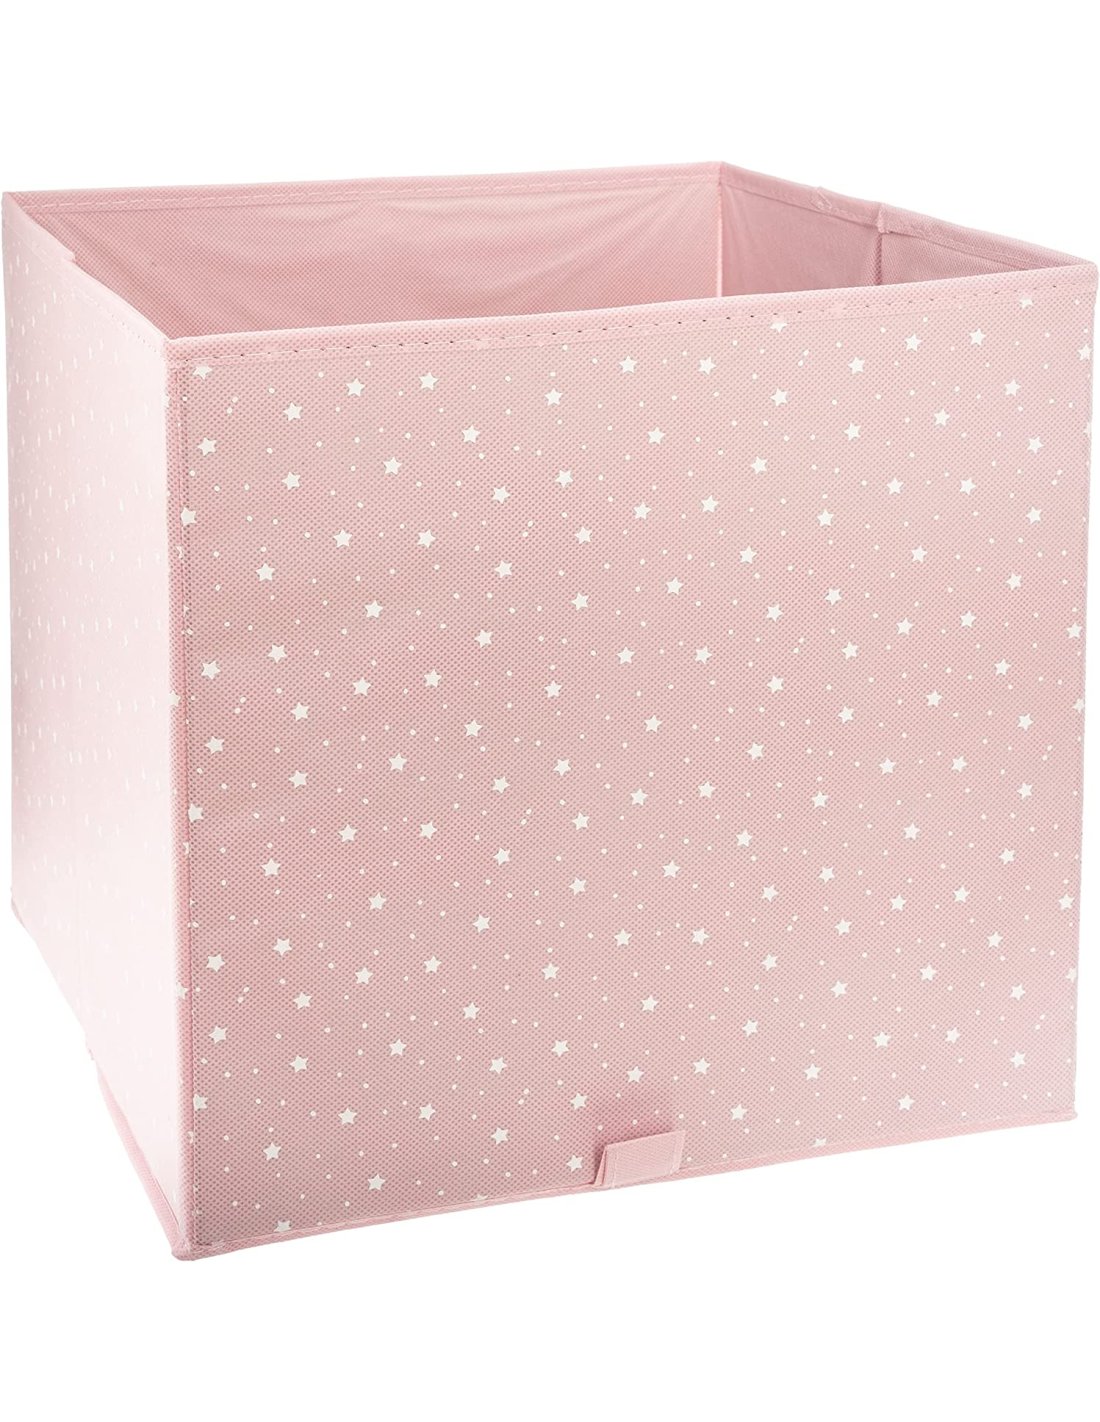 https://hanselhome.com/59171-thickbox_default/cajas-almacenaje-infantil-plegable-cuadrados-cestas-de-almacenamientocaja-de-tela-cesta-de-ordenacion-infantil-rosa-estrella.jpg